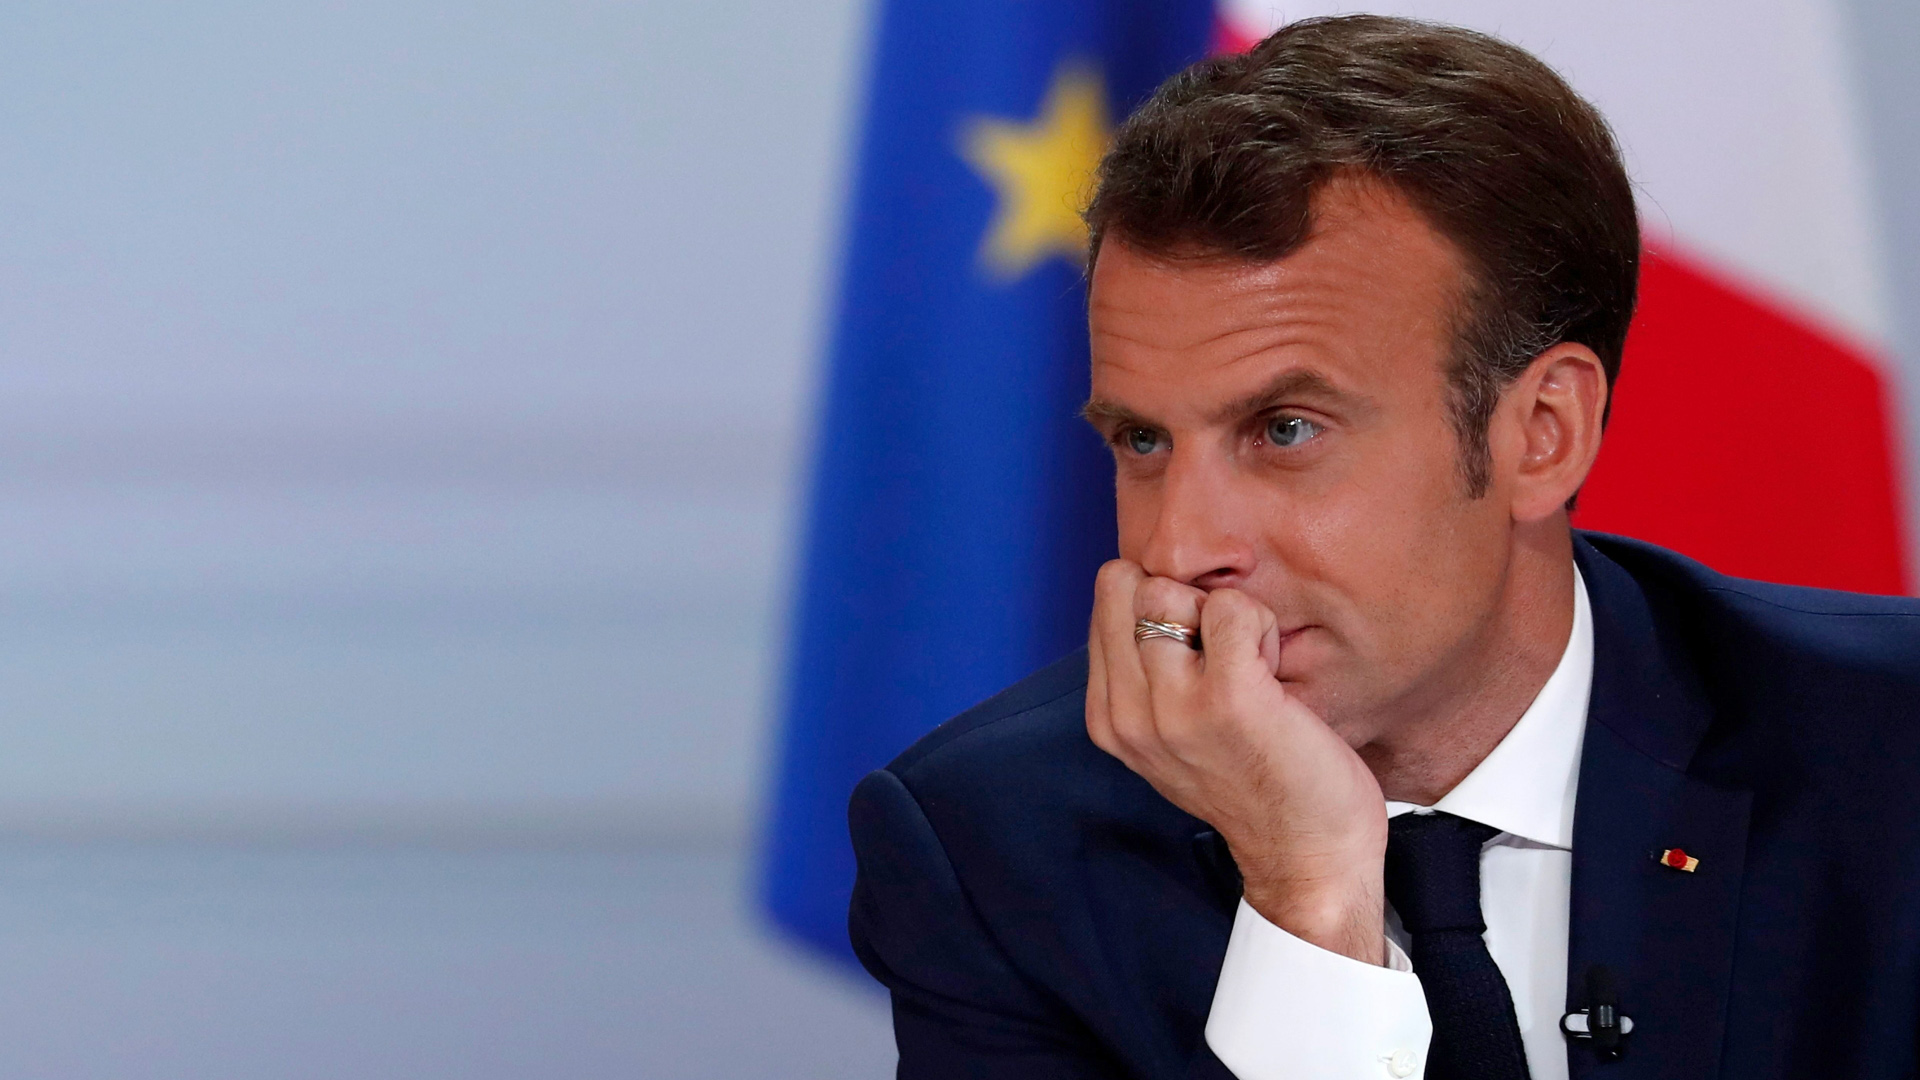 Emmanuel Macron | IAN LANGSDON/EPA-EFE/REX